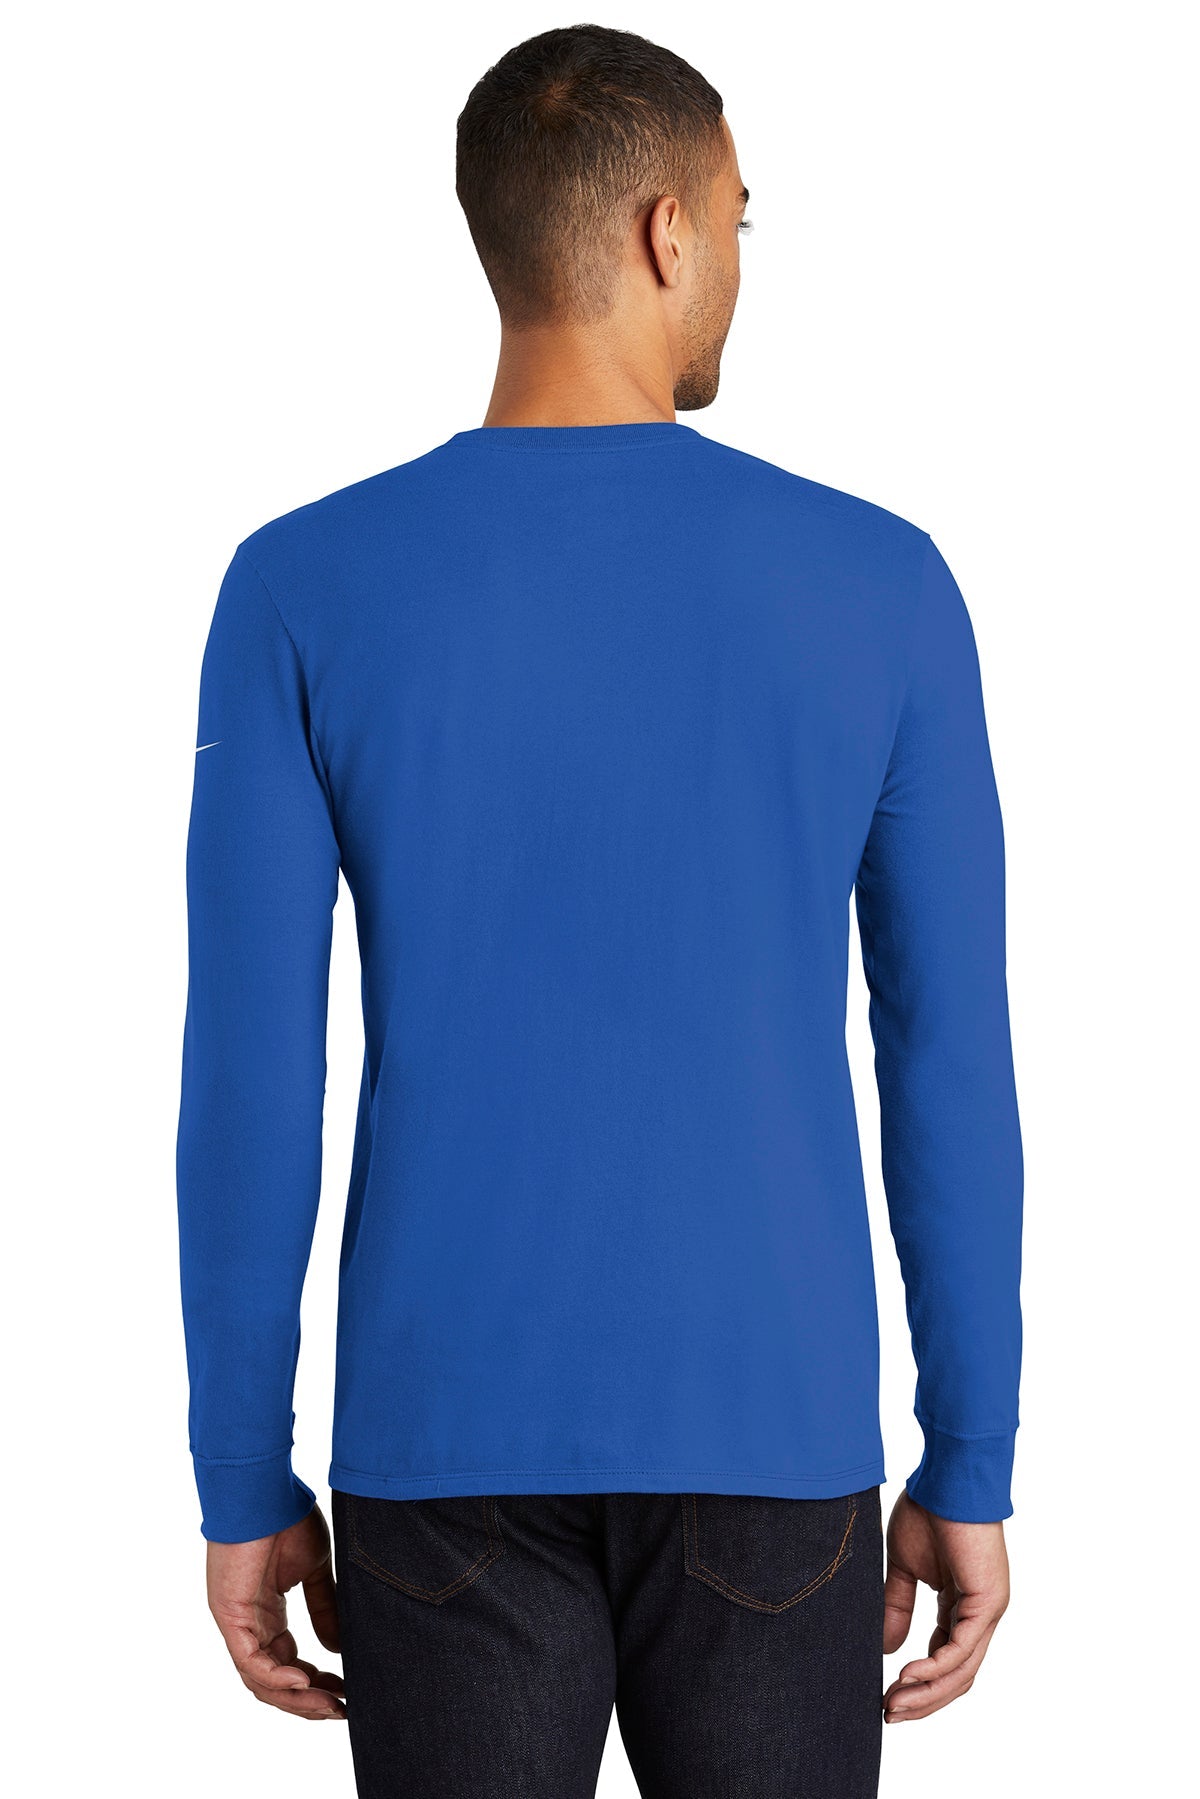 nike-core-cotton-long-sleeve-tee-nkbq5232-rush-blue